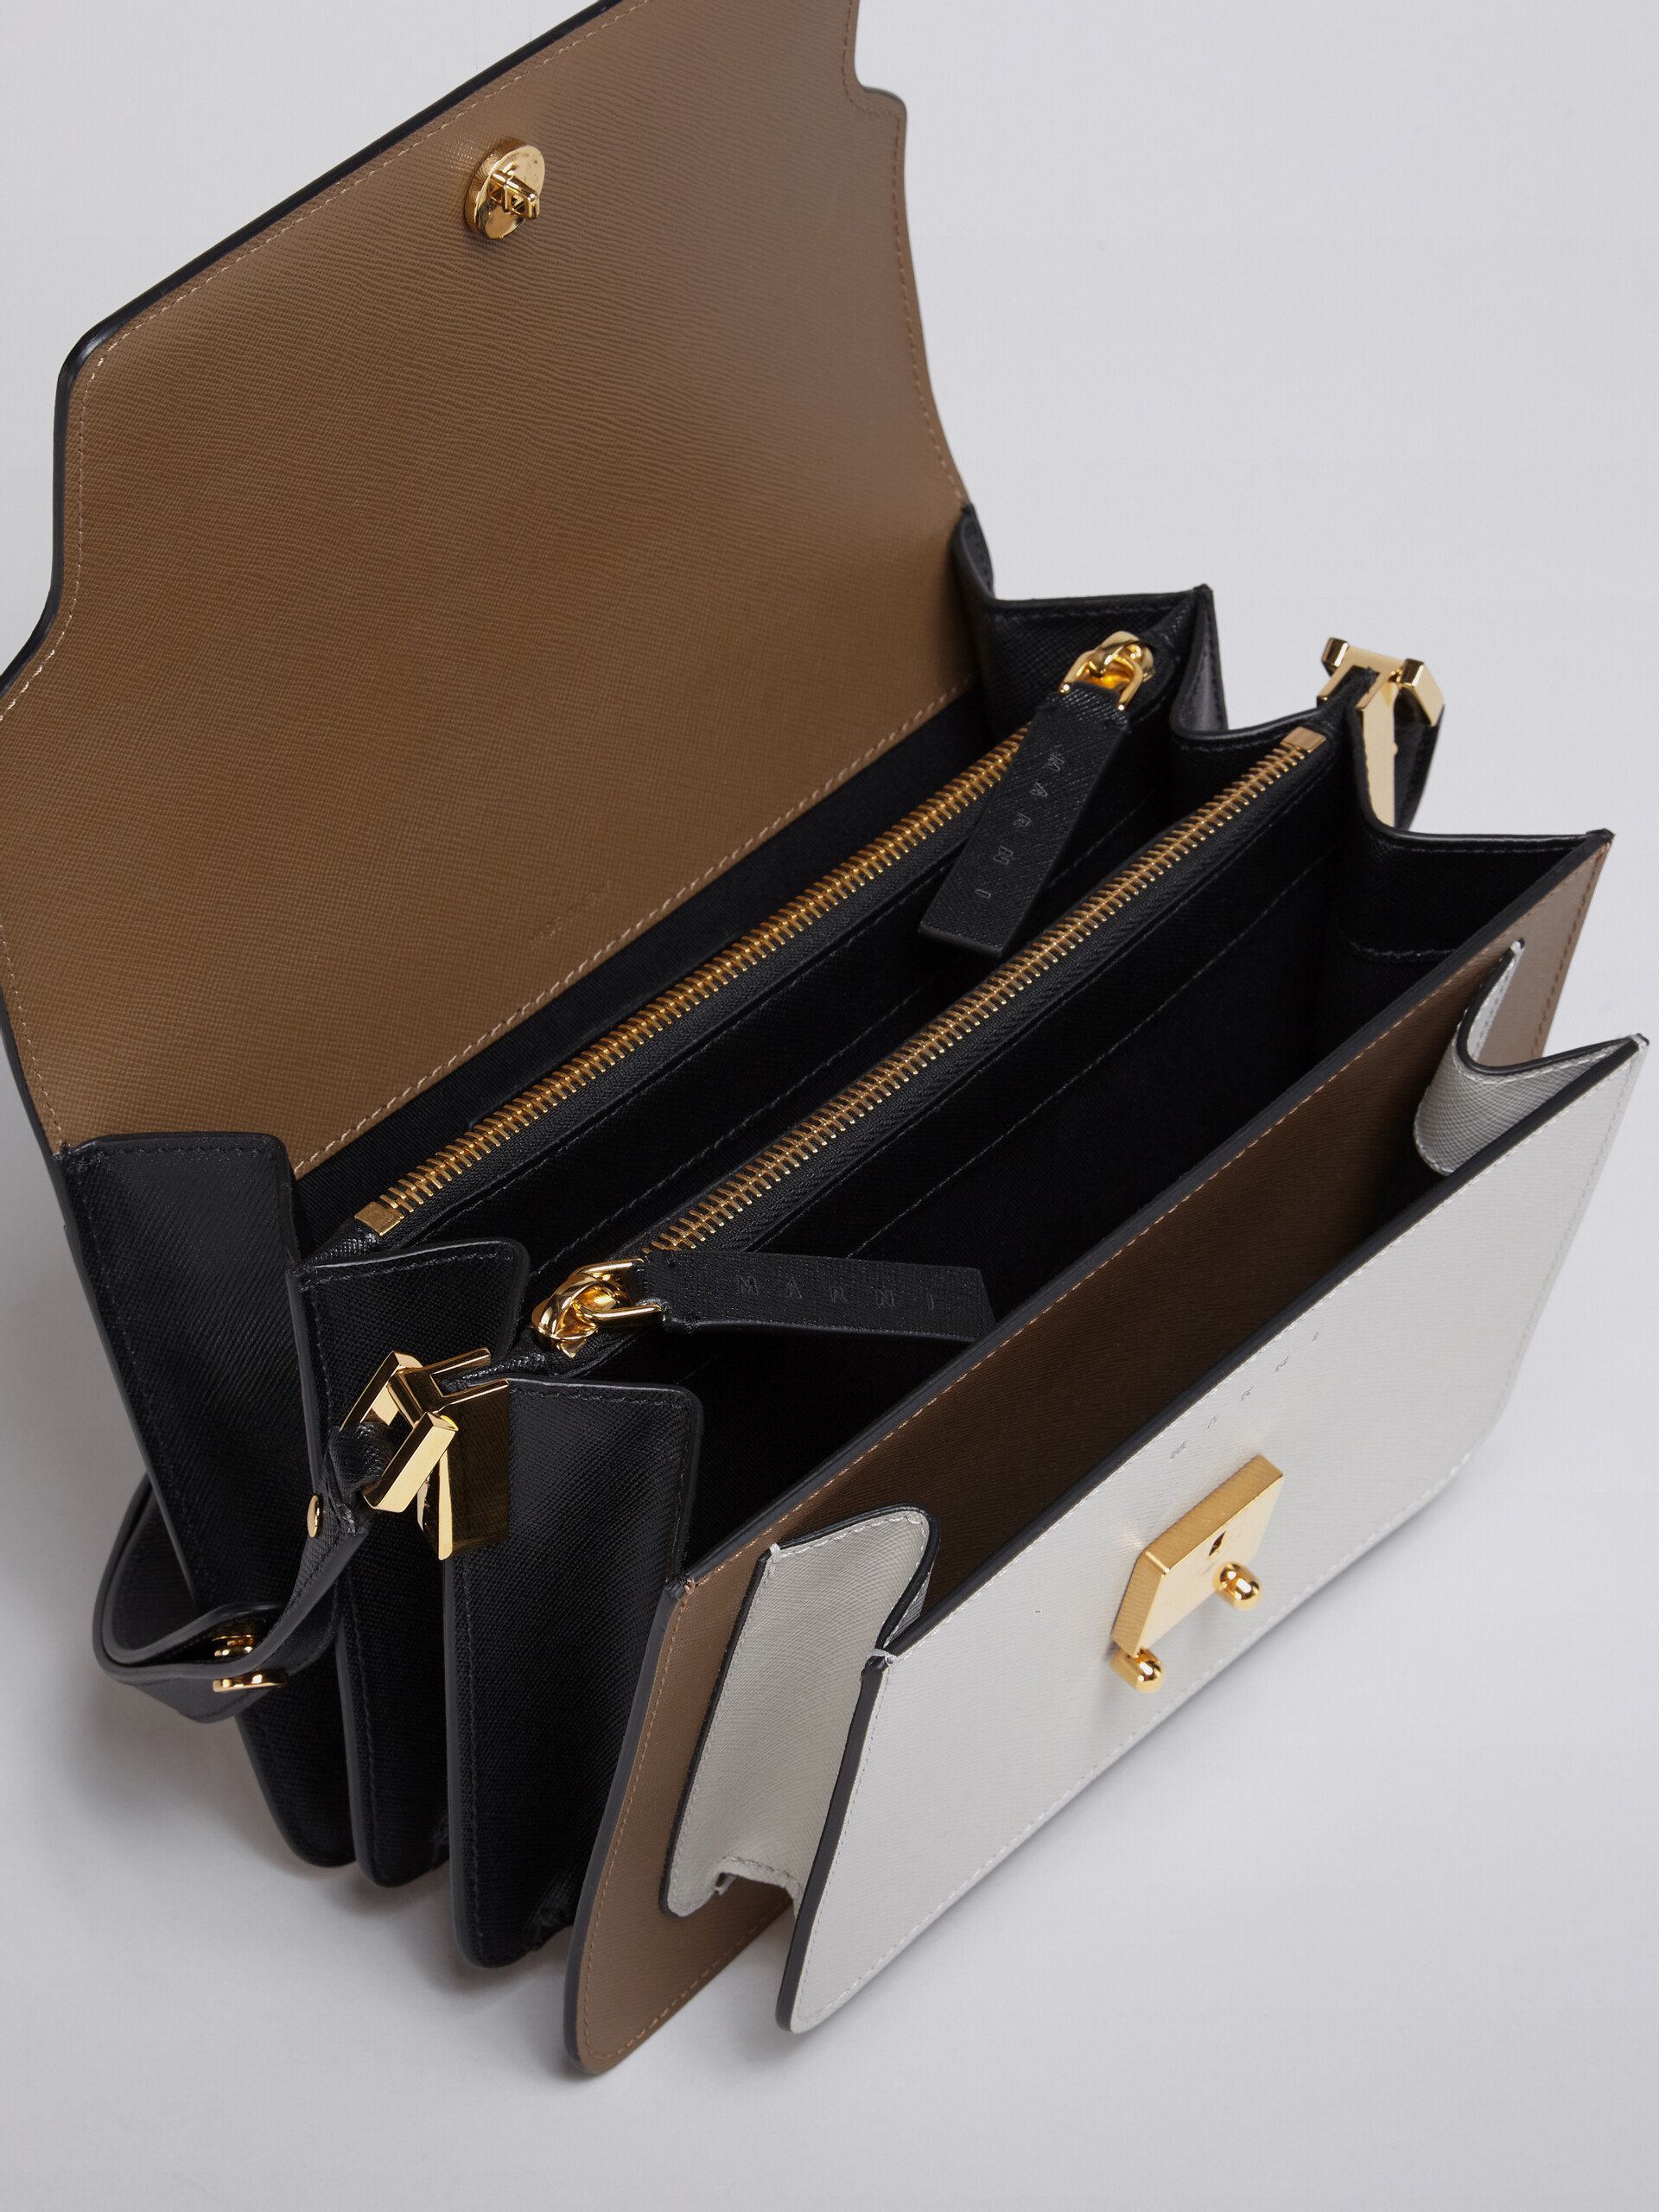 TRUNK medium bag in brown grey and black saffiano leather - Shoulder Bag - Image 3